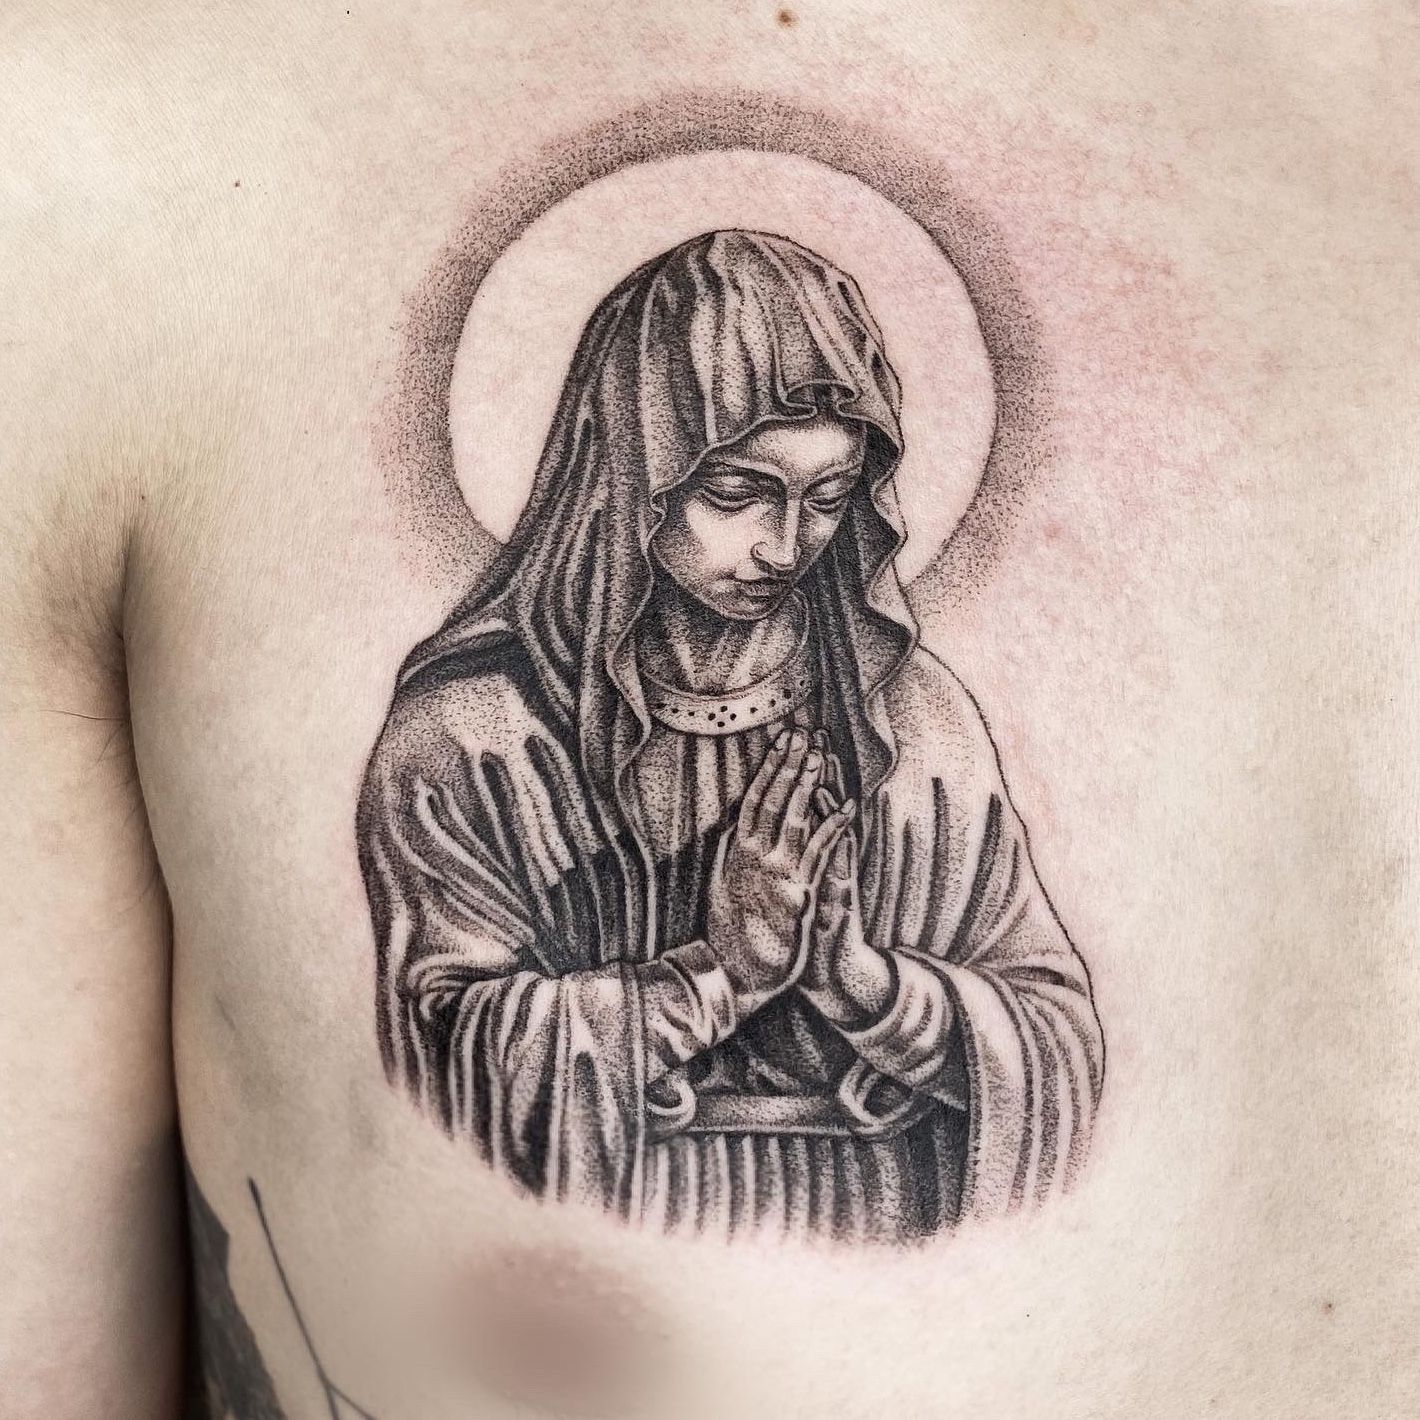 Tattoo Ideas | Jesus, Mary and Praying hand tattoo design | Facebook